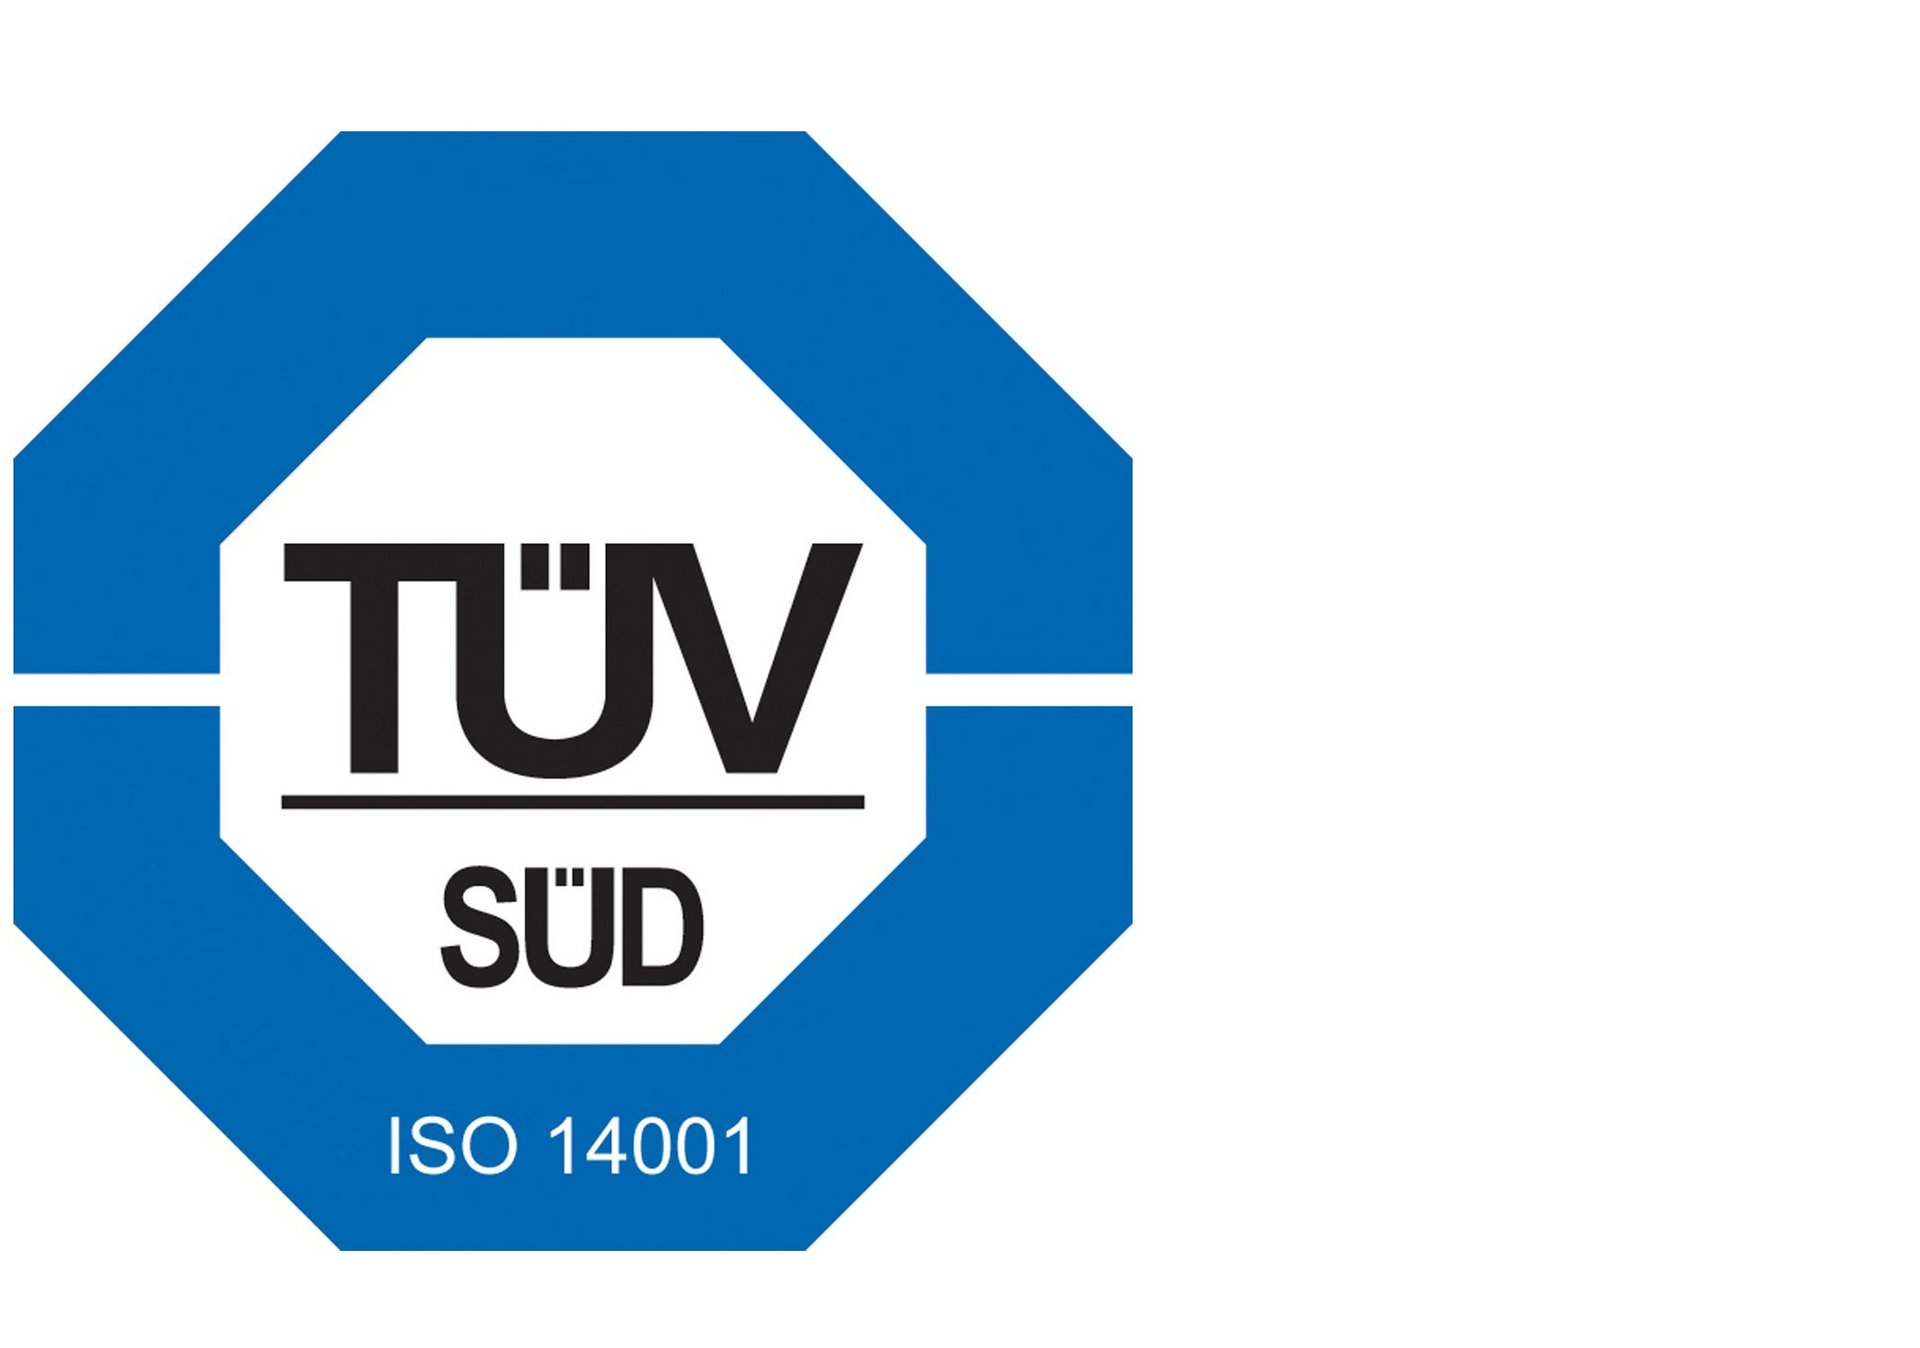 TUEV SUED LOGO ISO14001